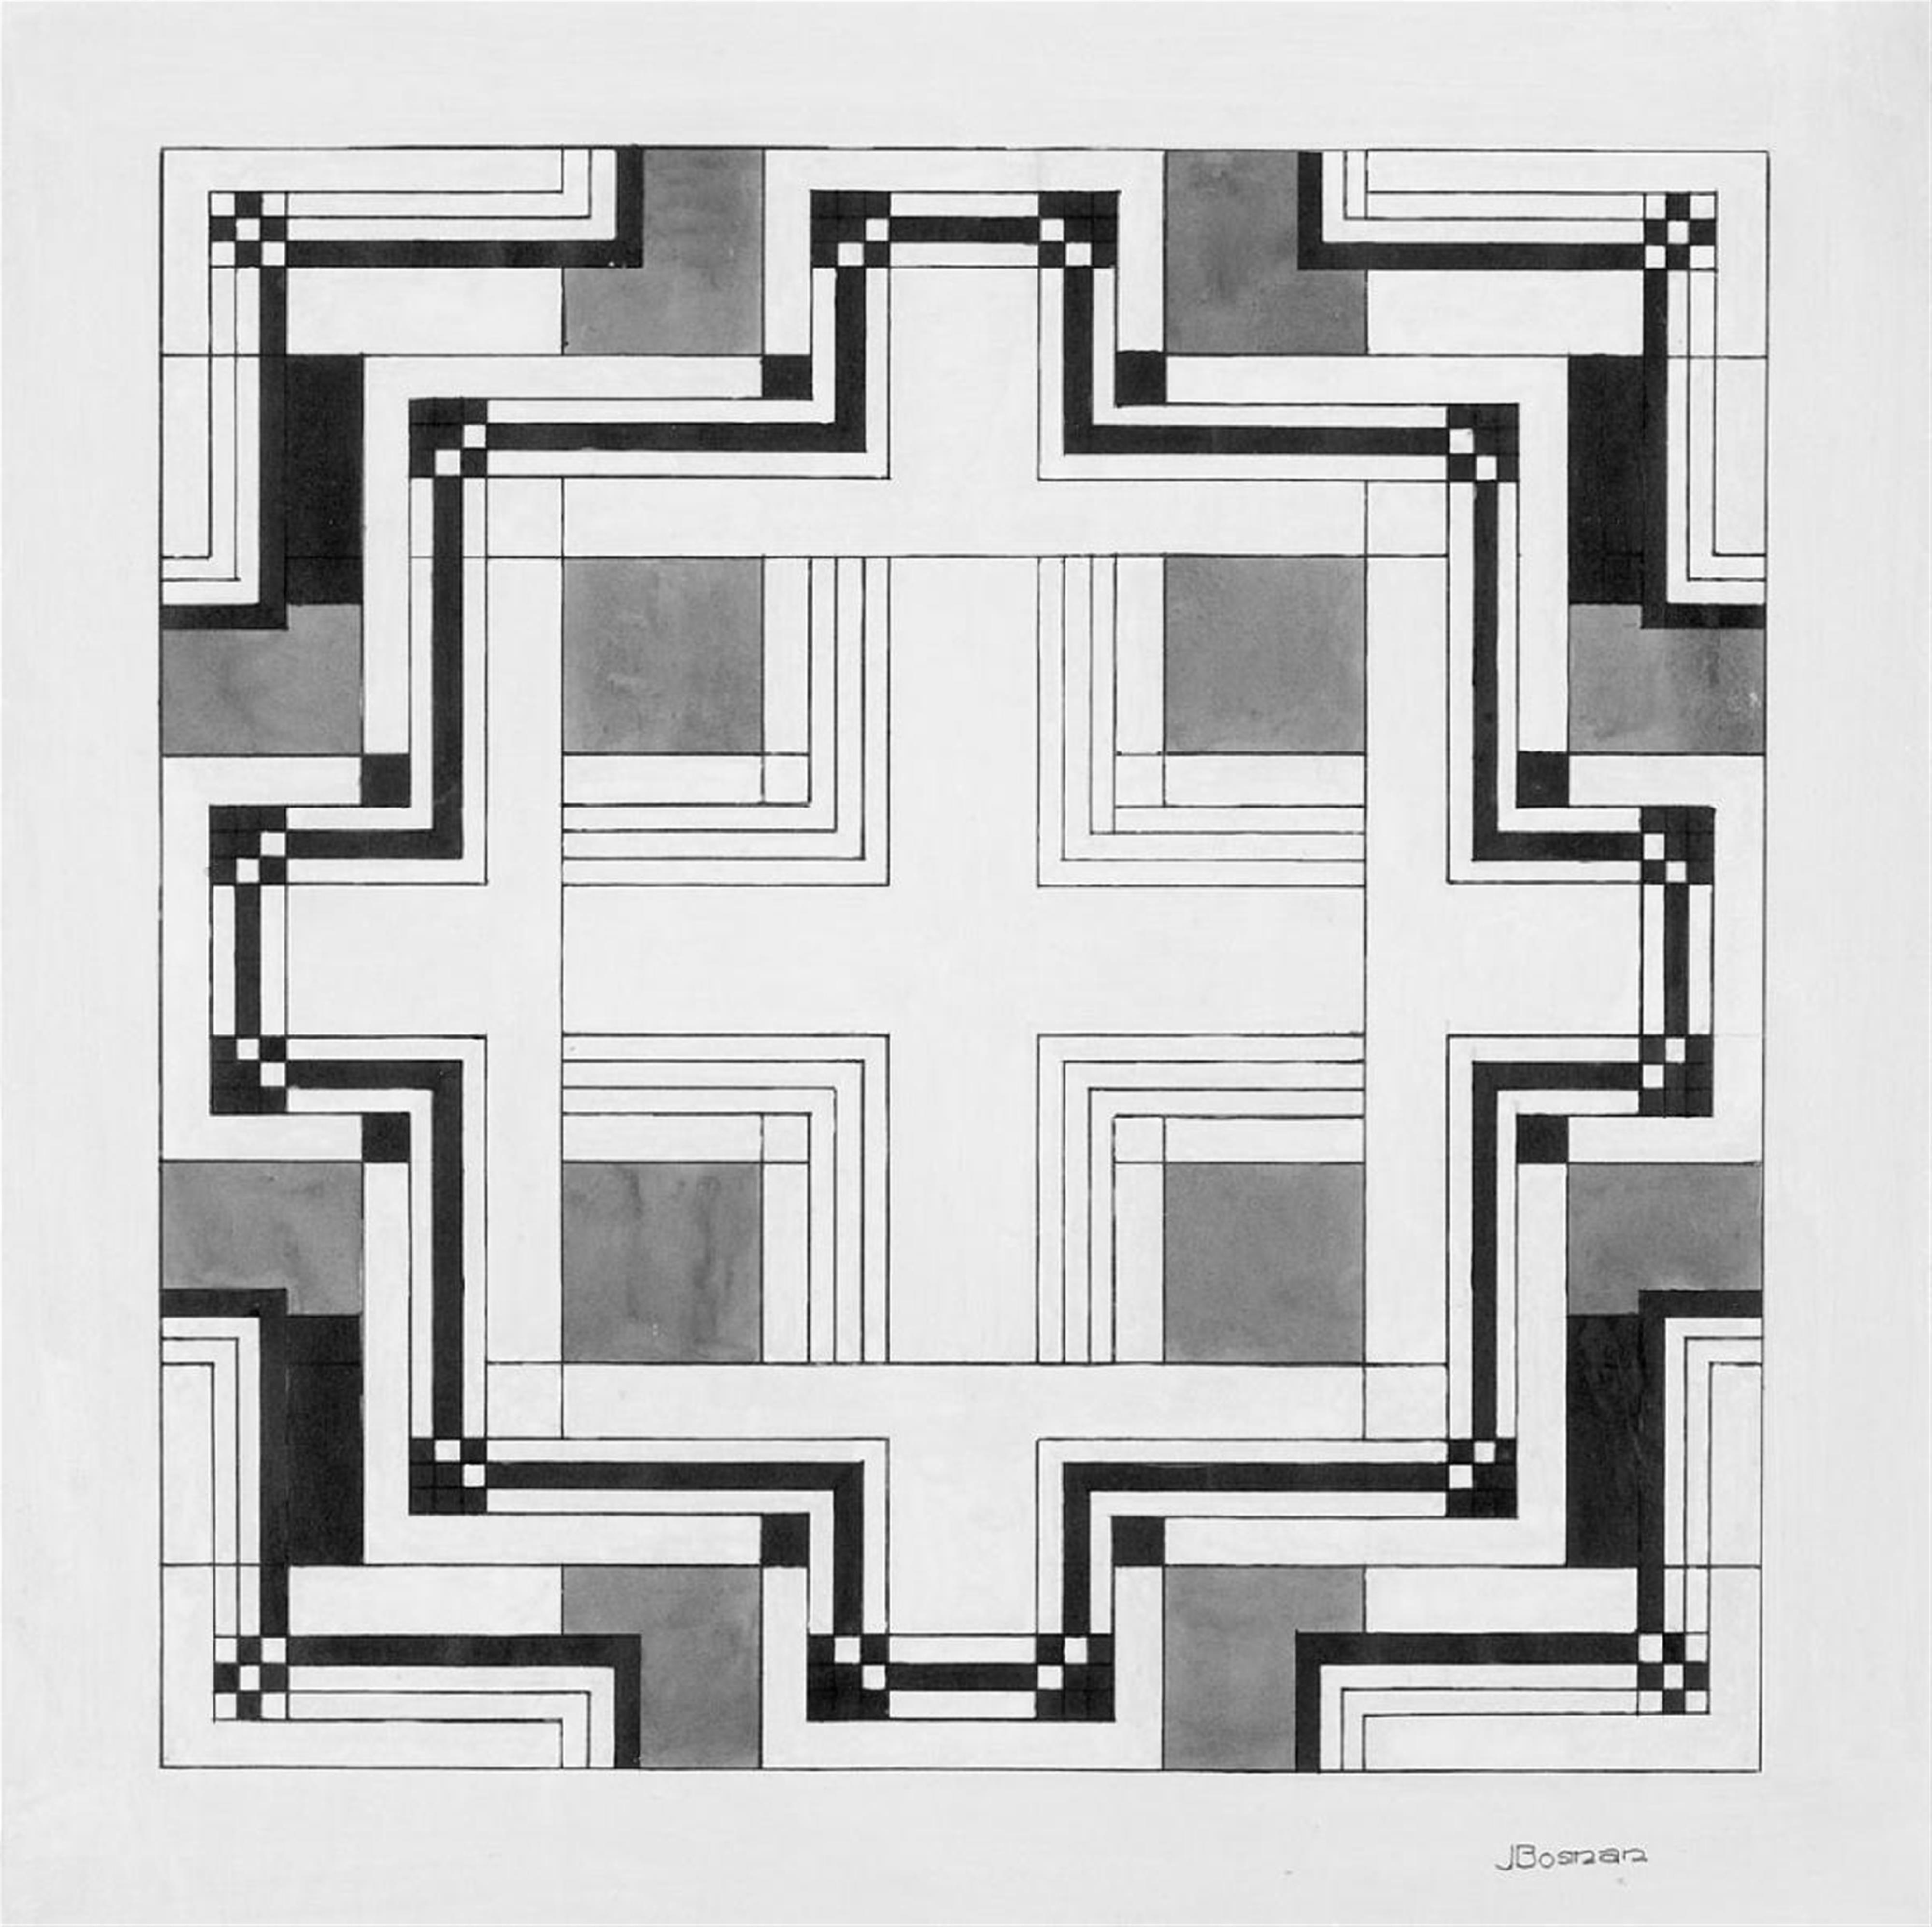 Jacob Bosman - Geometrische Komposition - image-1